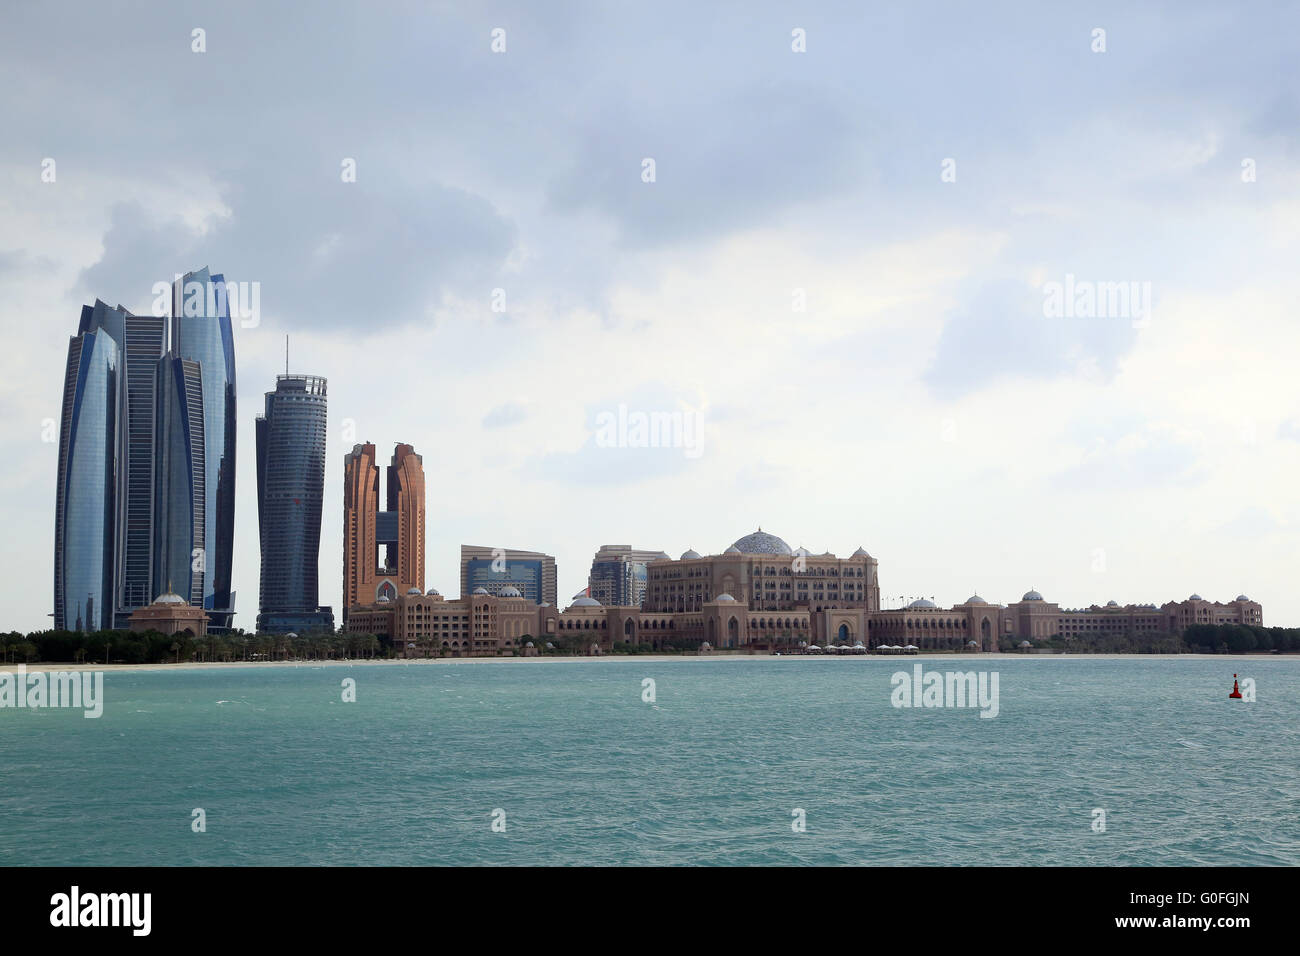 Skyline of Abu Dhabi with Ethiad Towers and the Emirates Palace Hotel Stock Photo